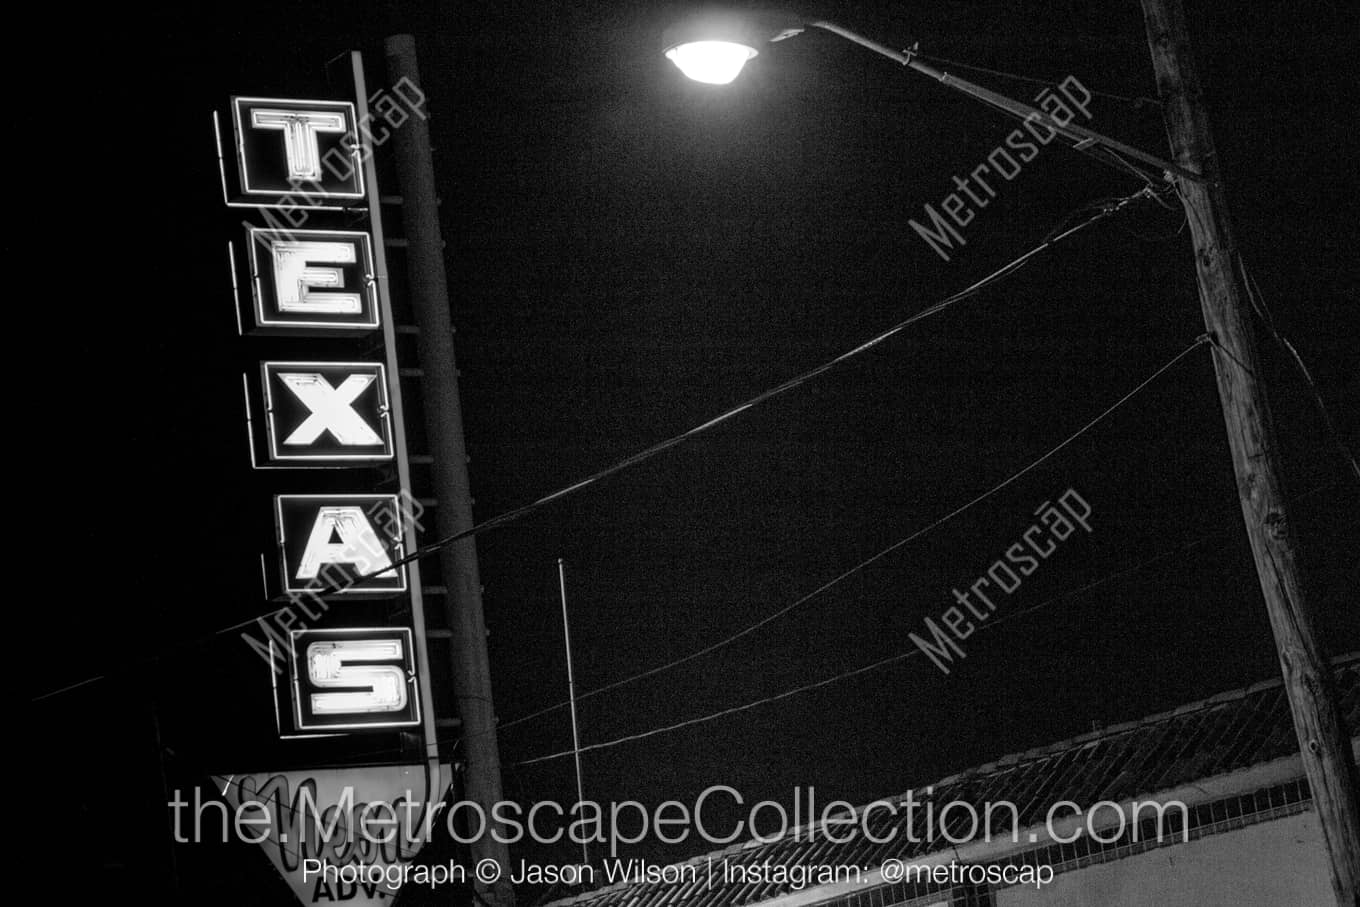 San Antonio Texas Picture at Night